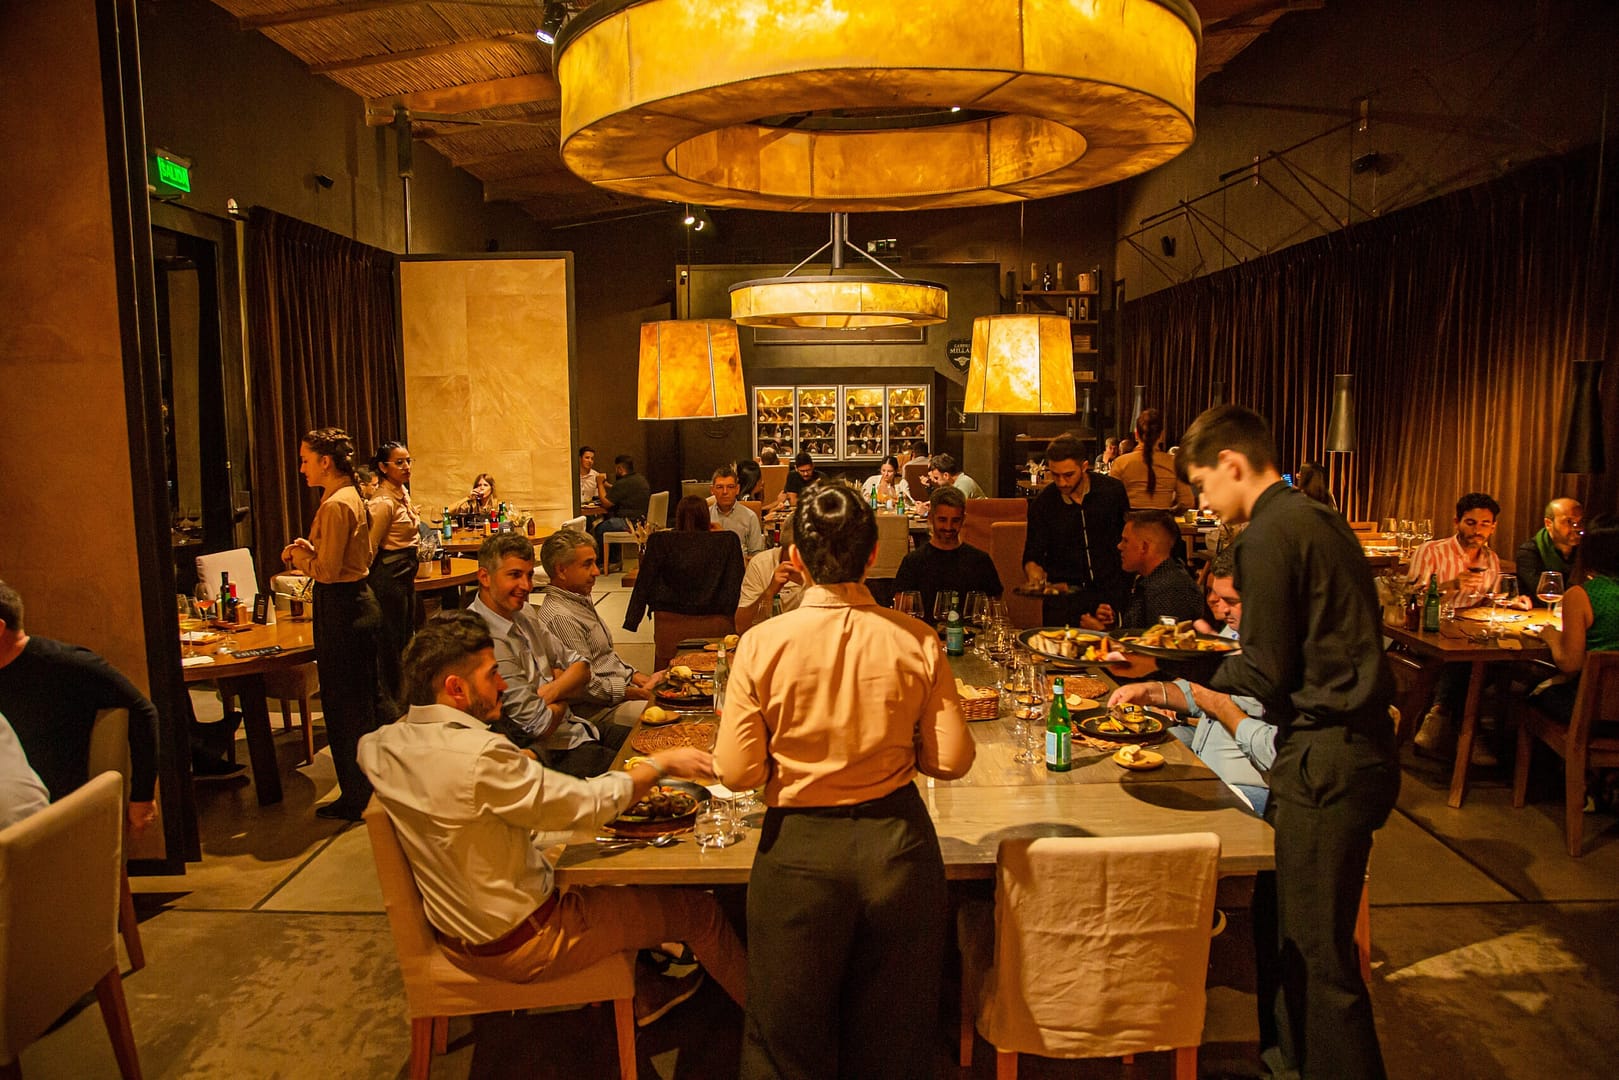 Restaurante Abrasado “abraza” a los argentinos con un atractivo descuento para residentes